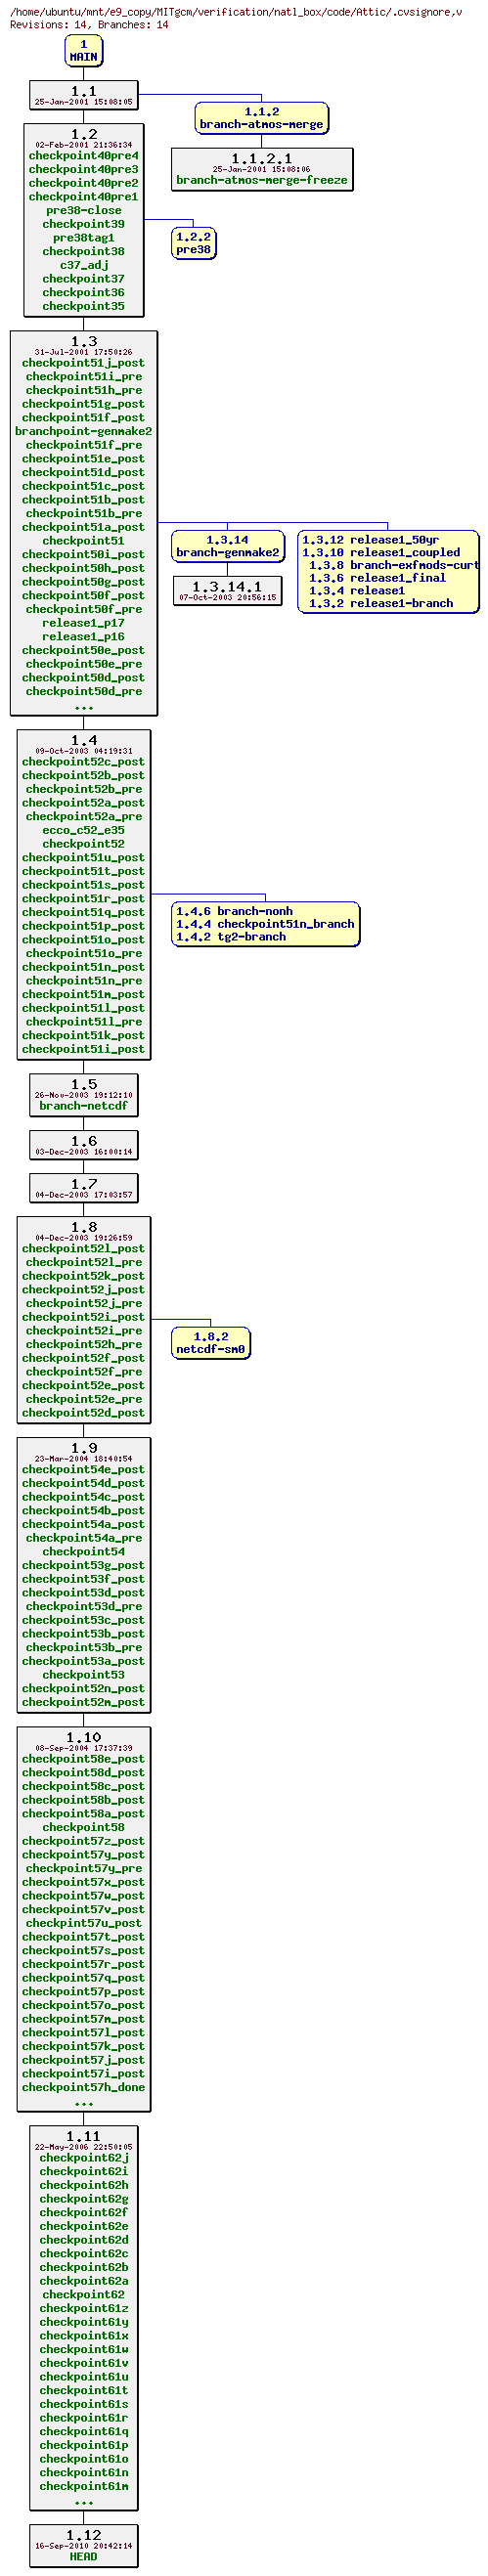 Revisions of MITgcm/verification/natl_box/code/.cvsignore